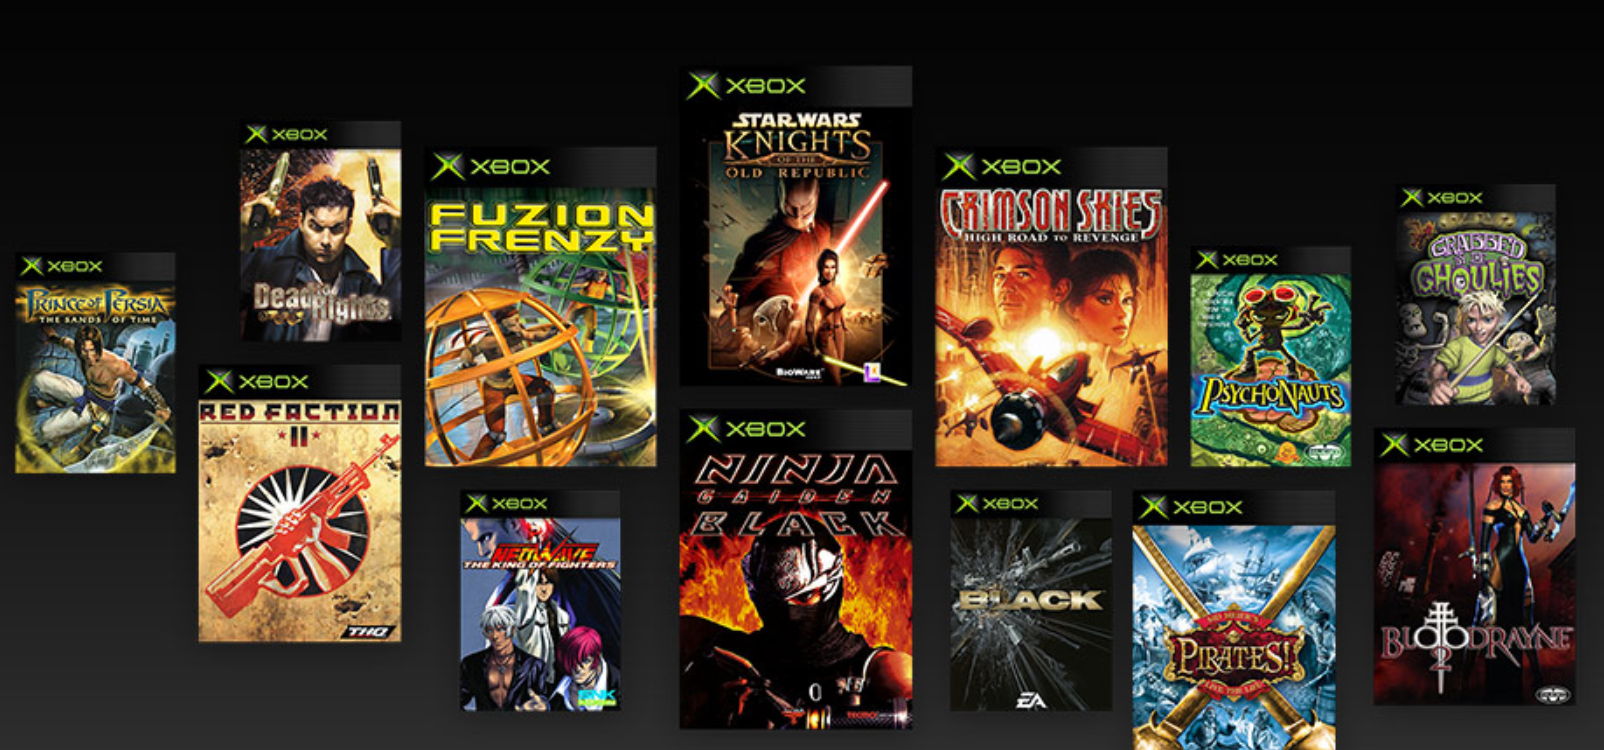 Xbox One: Original Xbox Backwards 